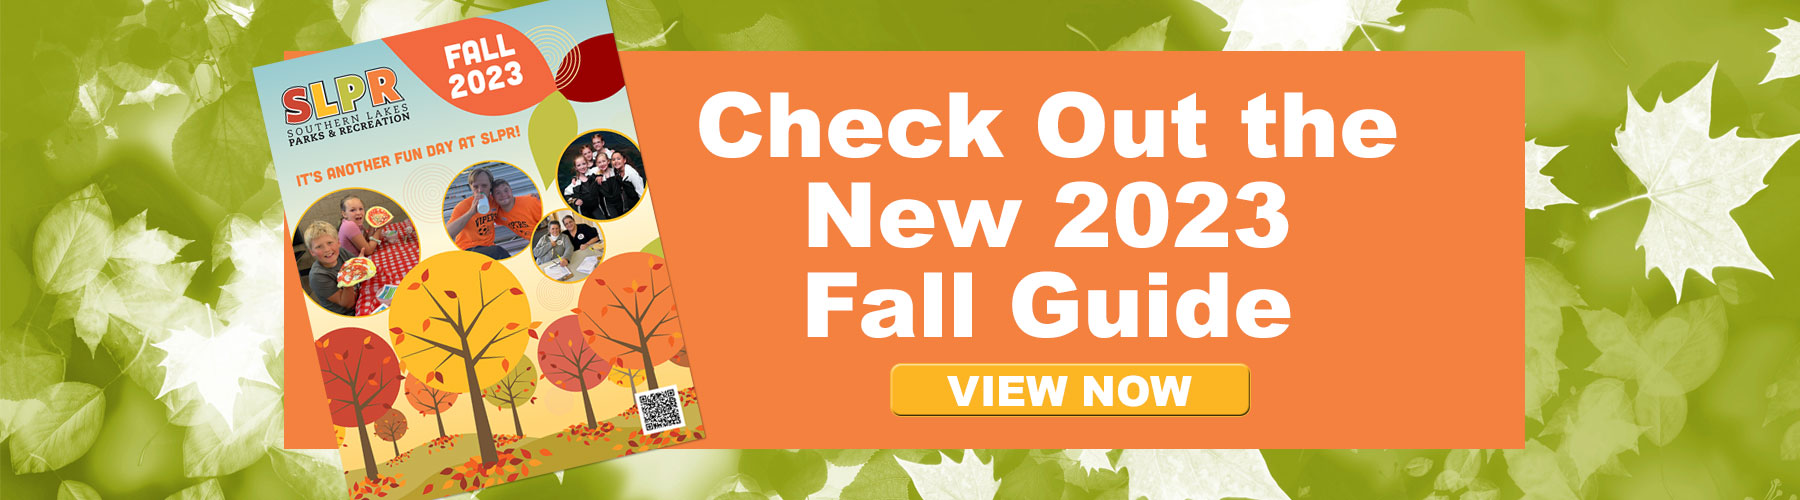 SLPR Fall 2023 Guide